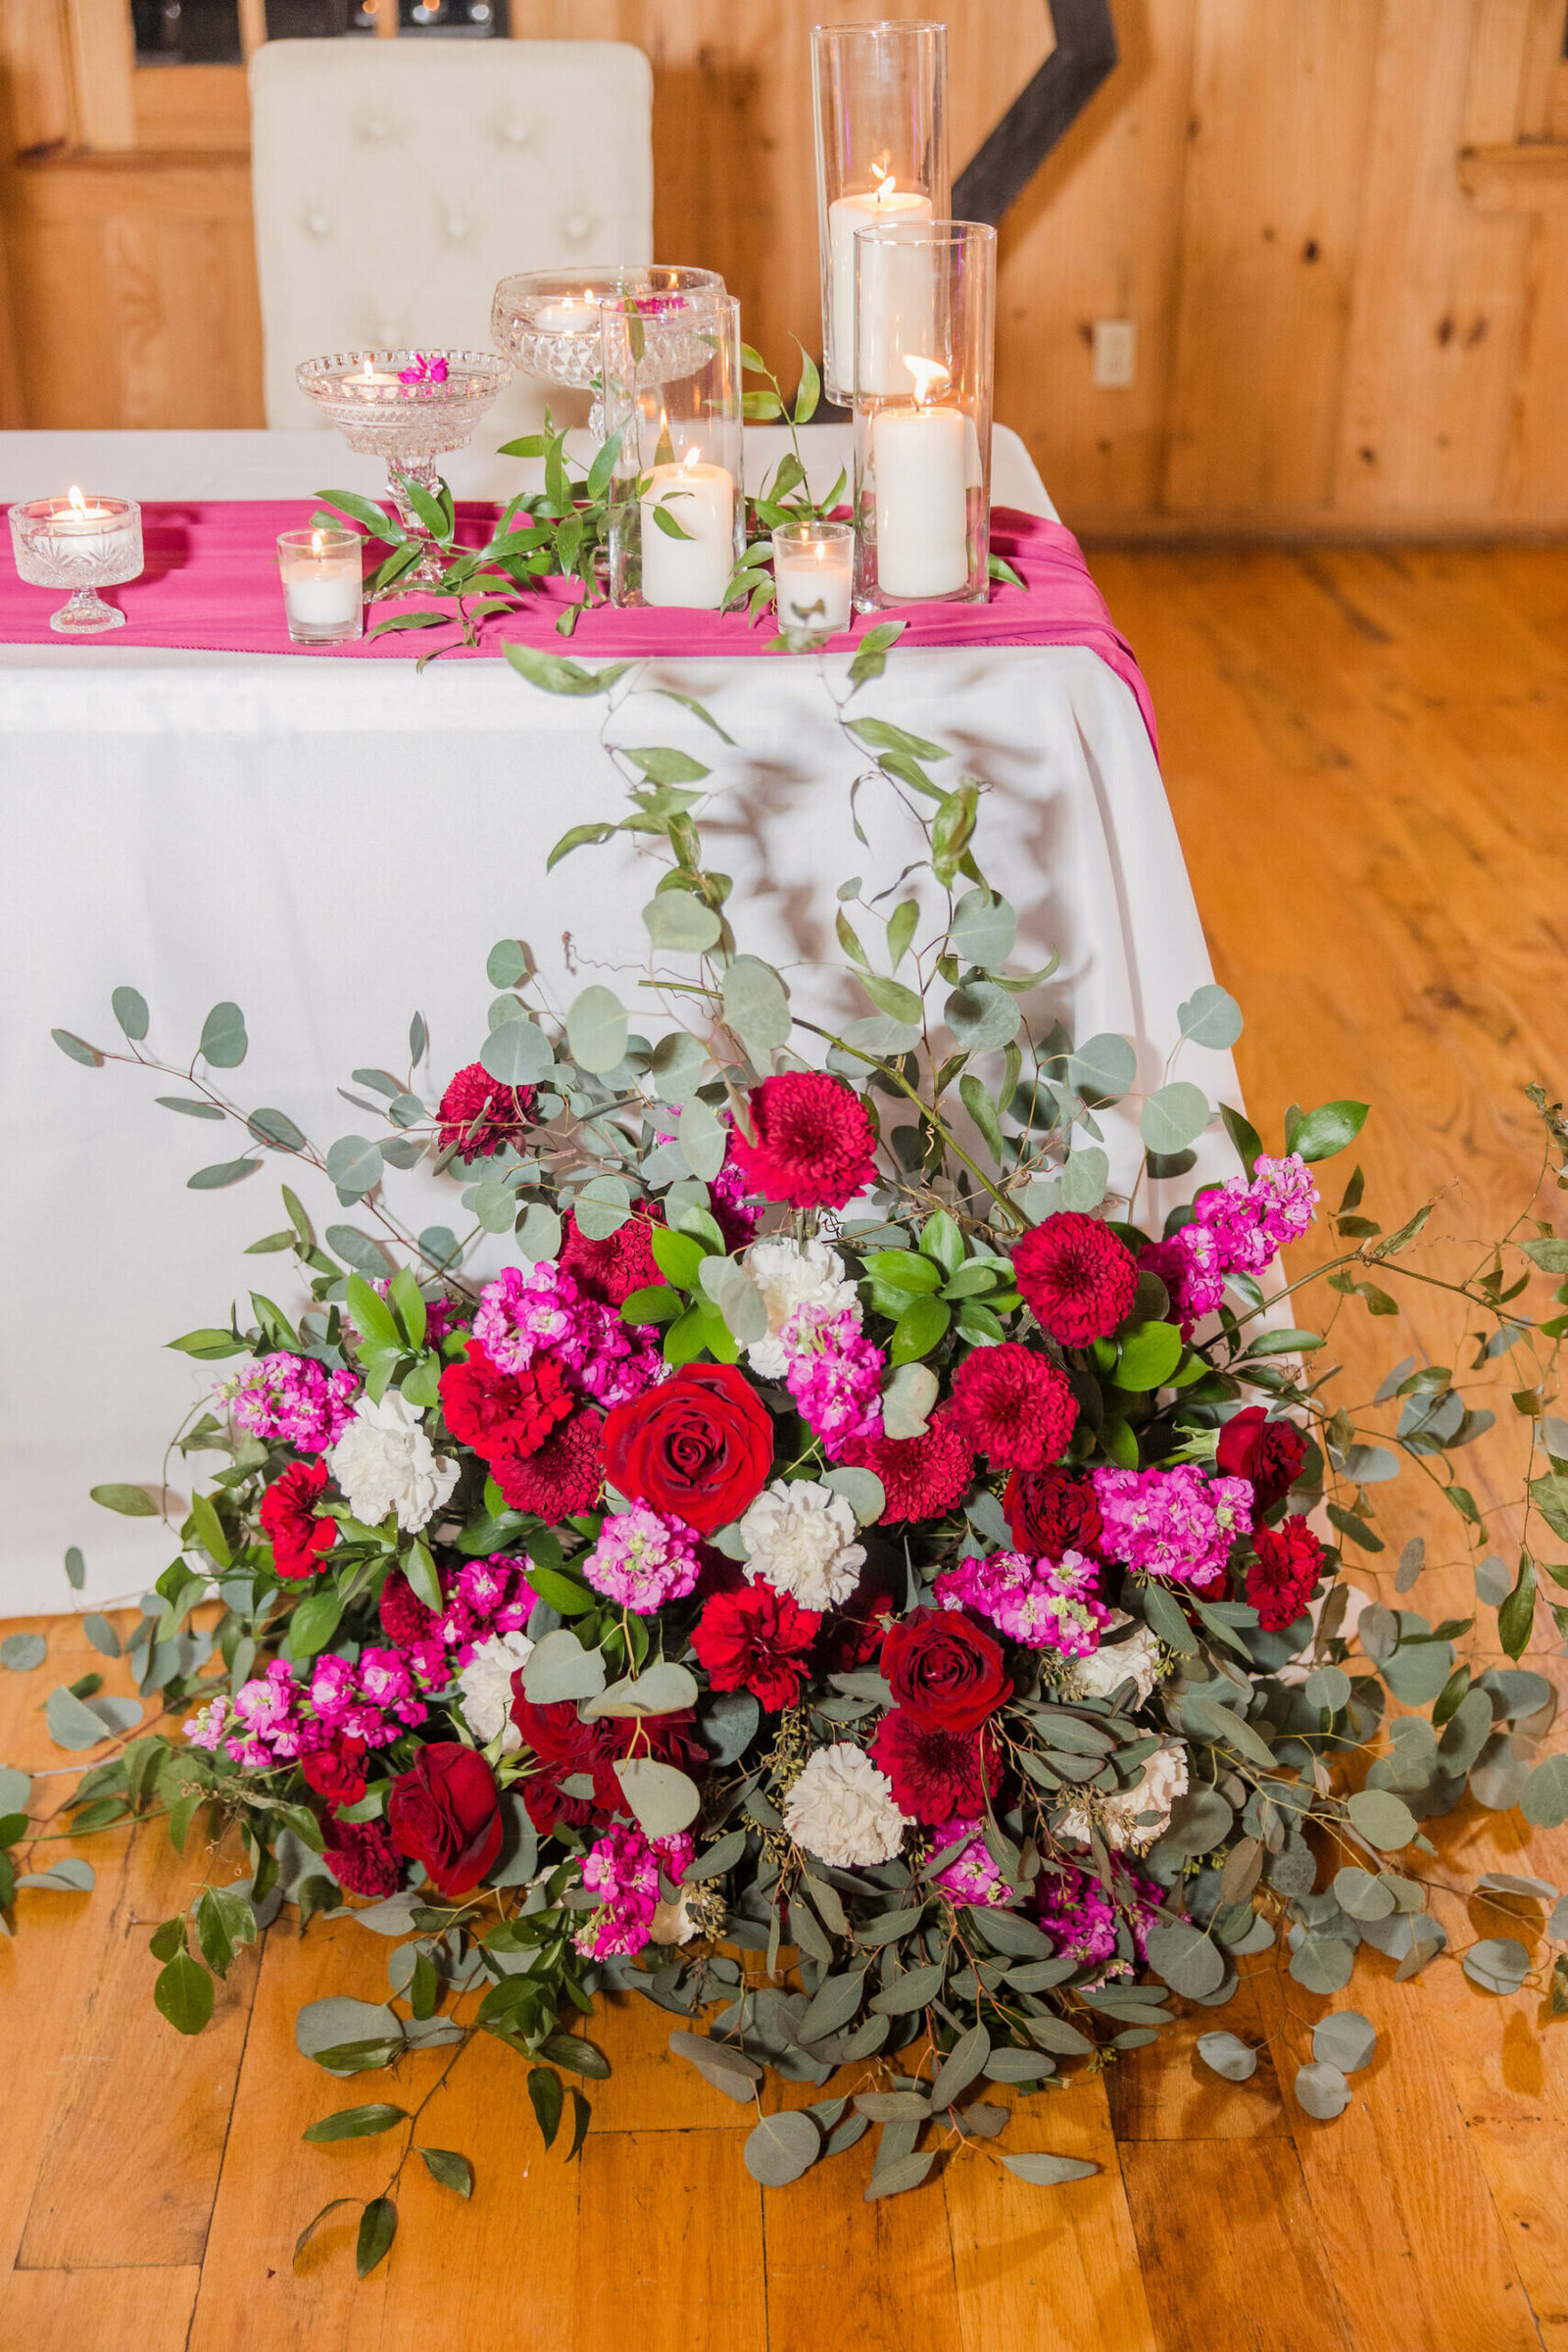 adriana_texas-old-town-austin-wedding-florist-16-scaled